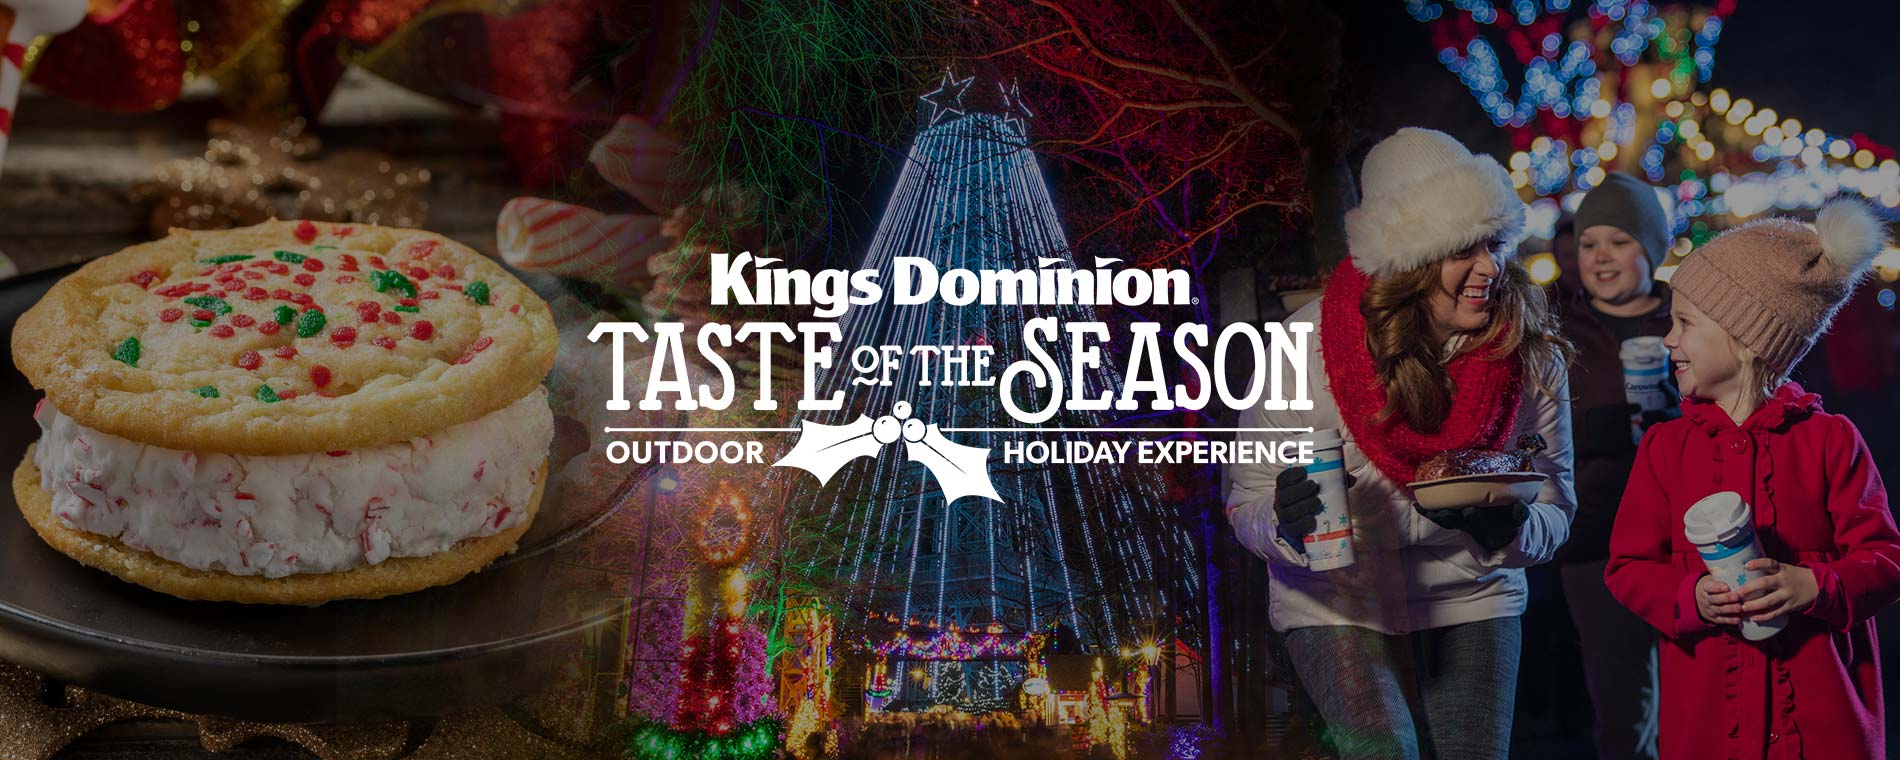 Taste of the season, Kings Dominion